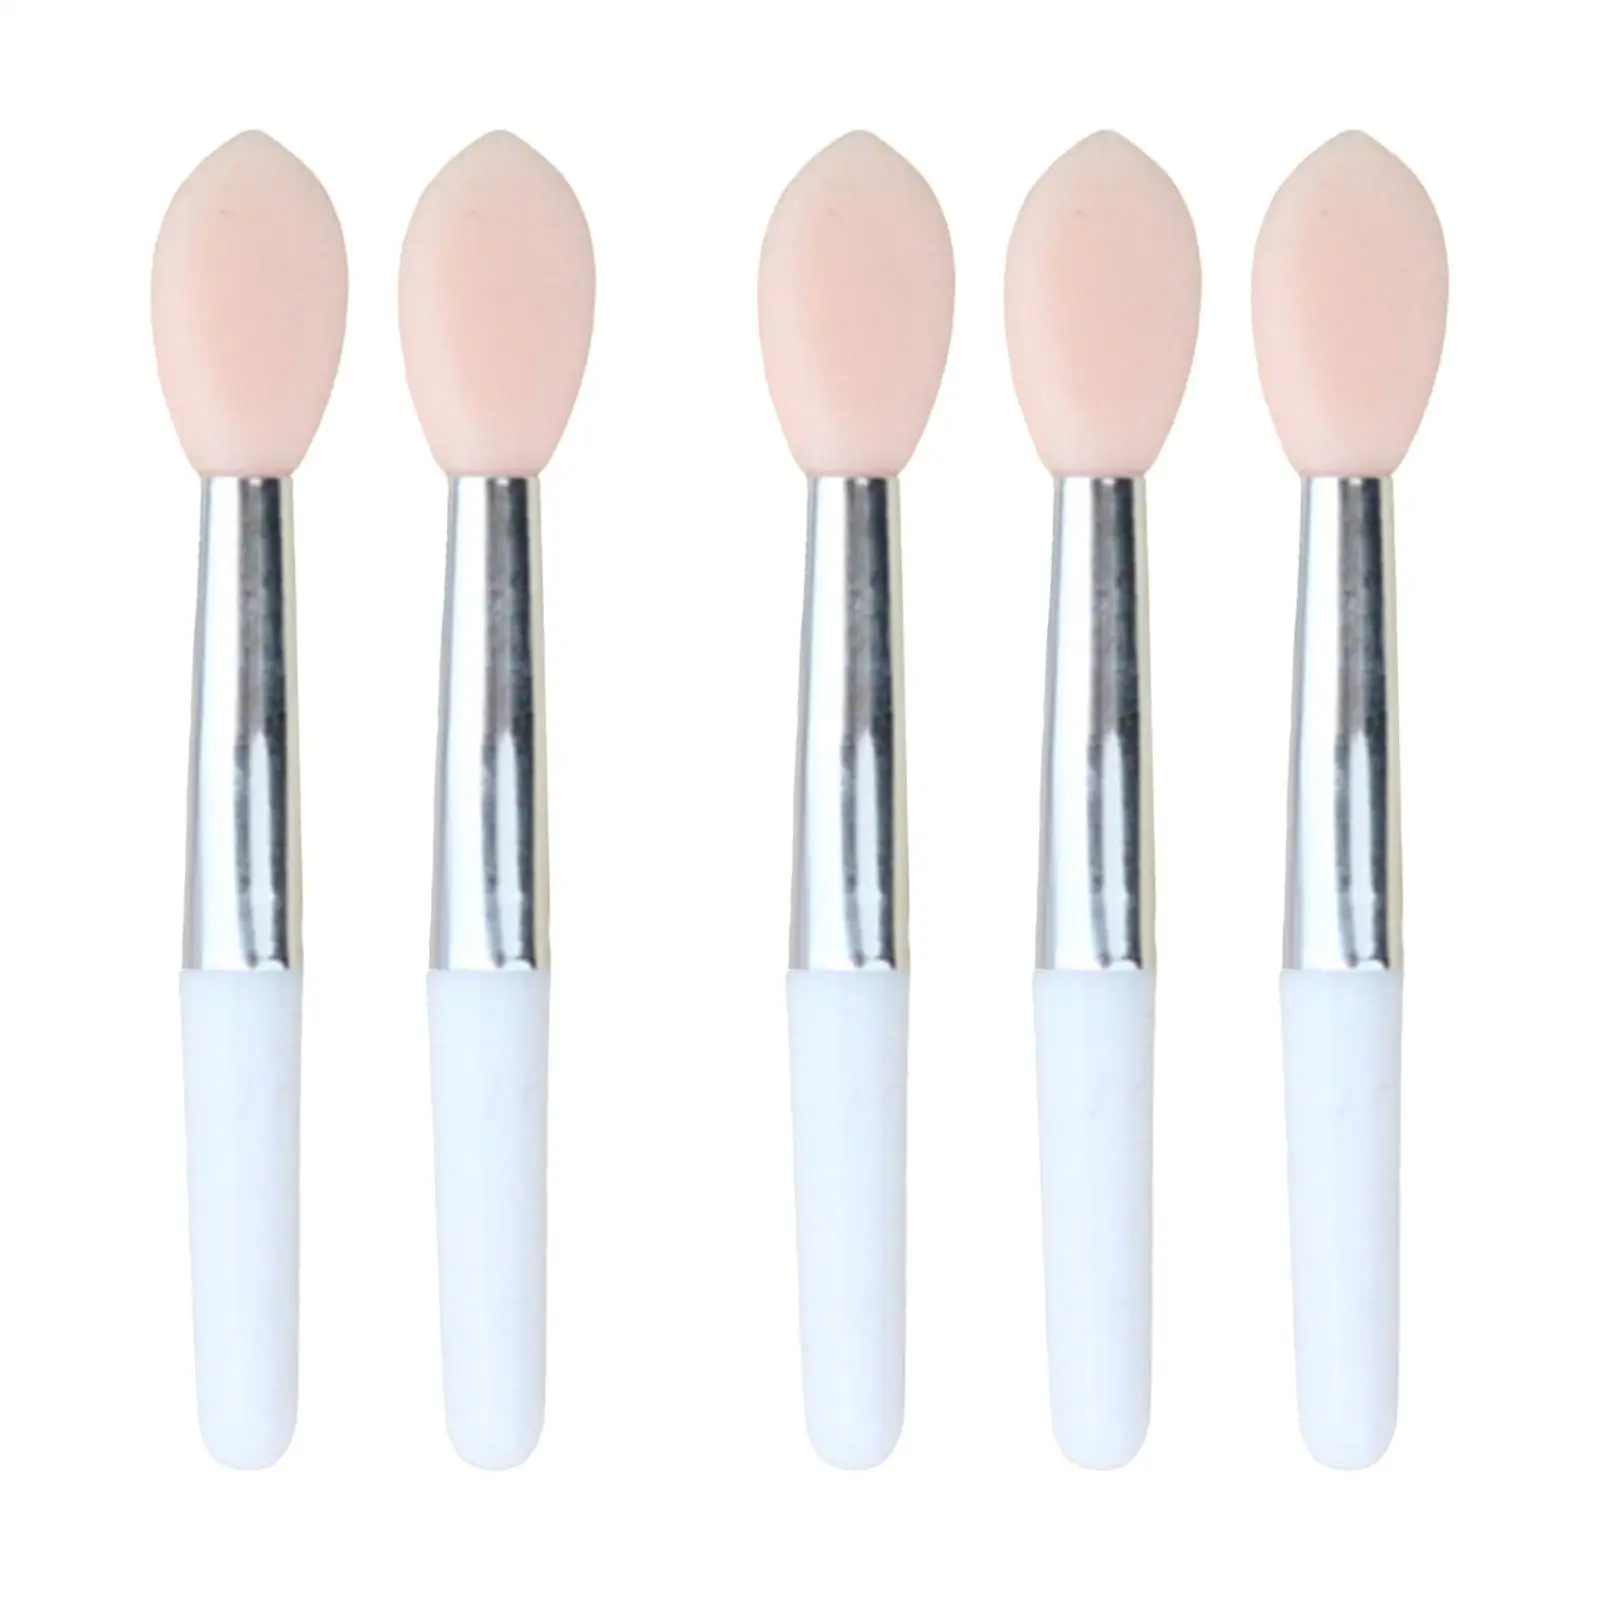 5x Silicone Lip Brush Makeup Brushes for lip Cream Applying Cream